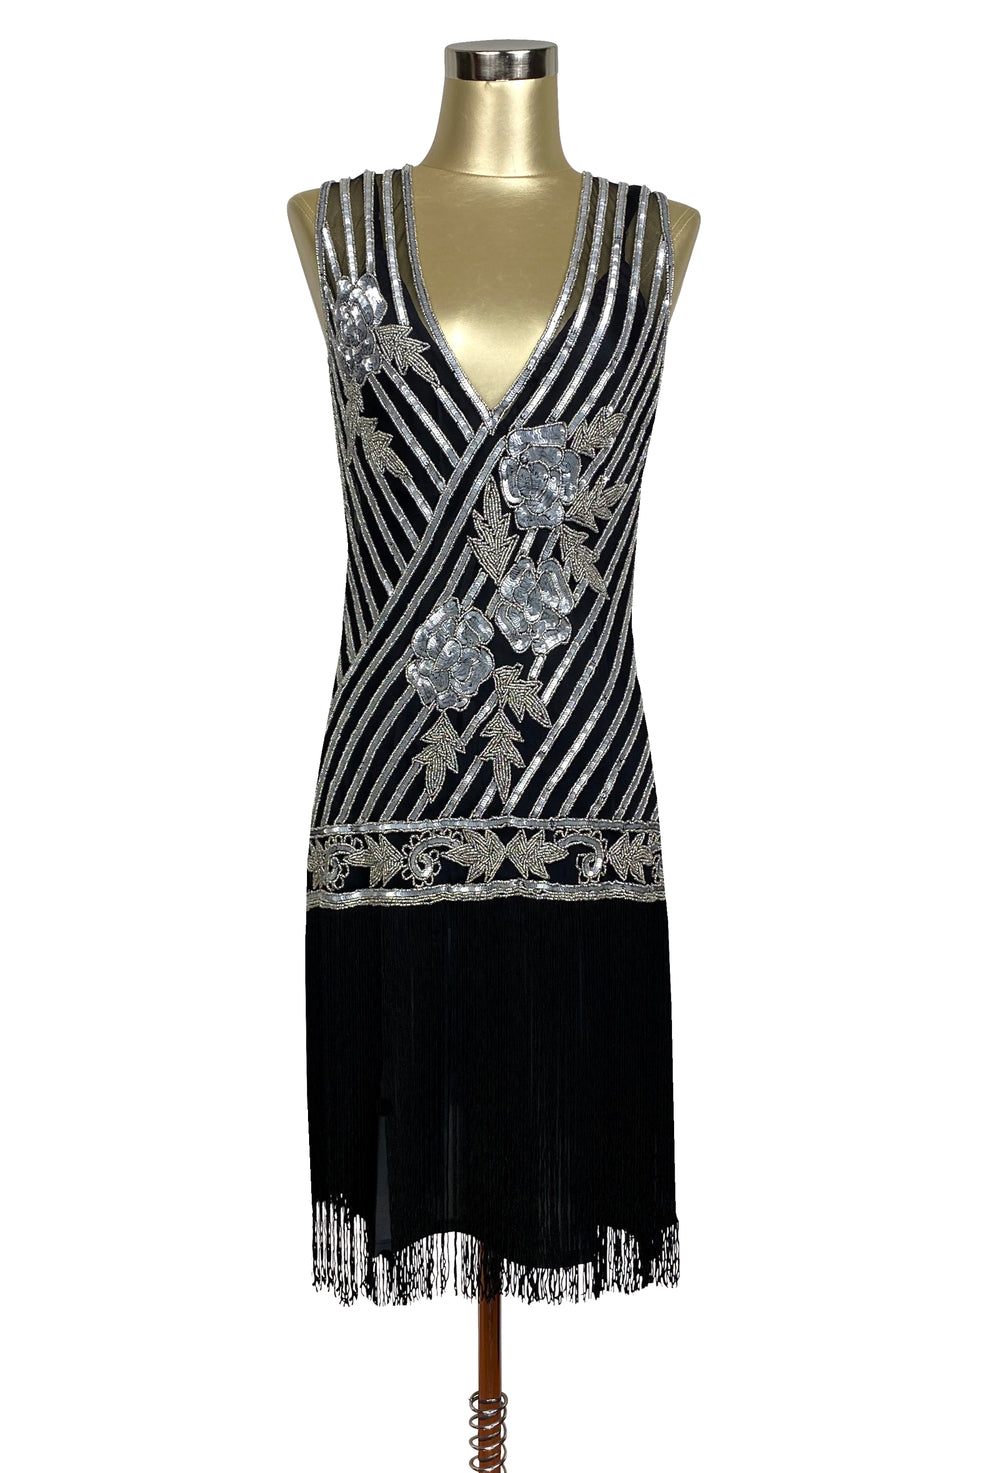 1920's Style Flapper Fringe Party Dress - The Original Artist Silver on Black